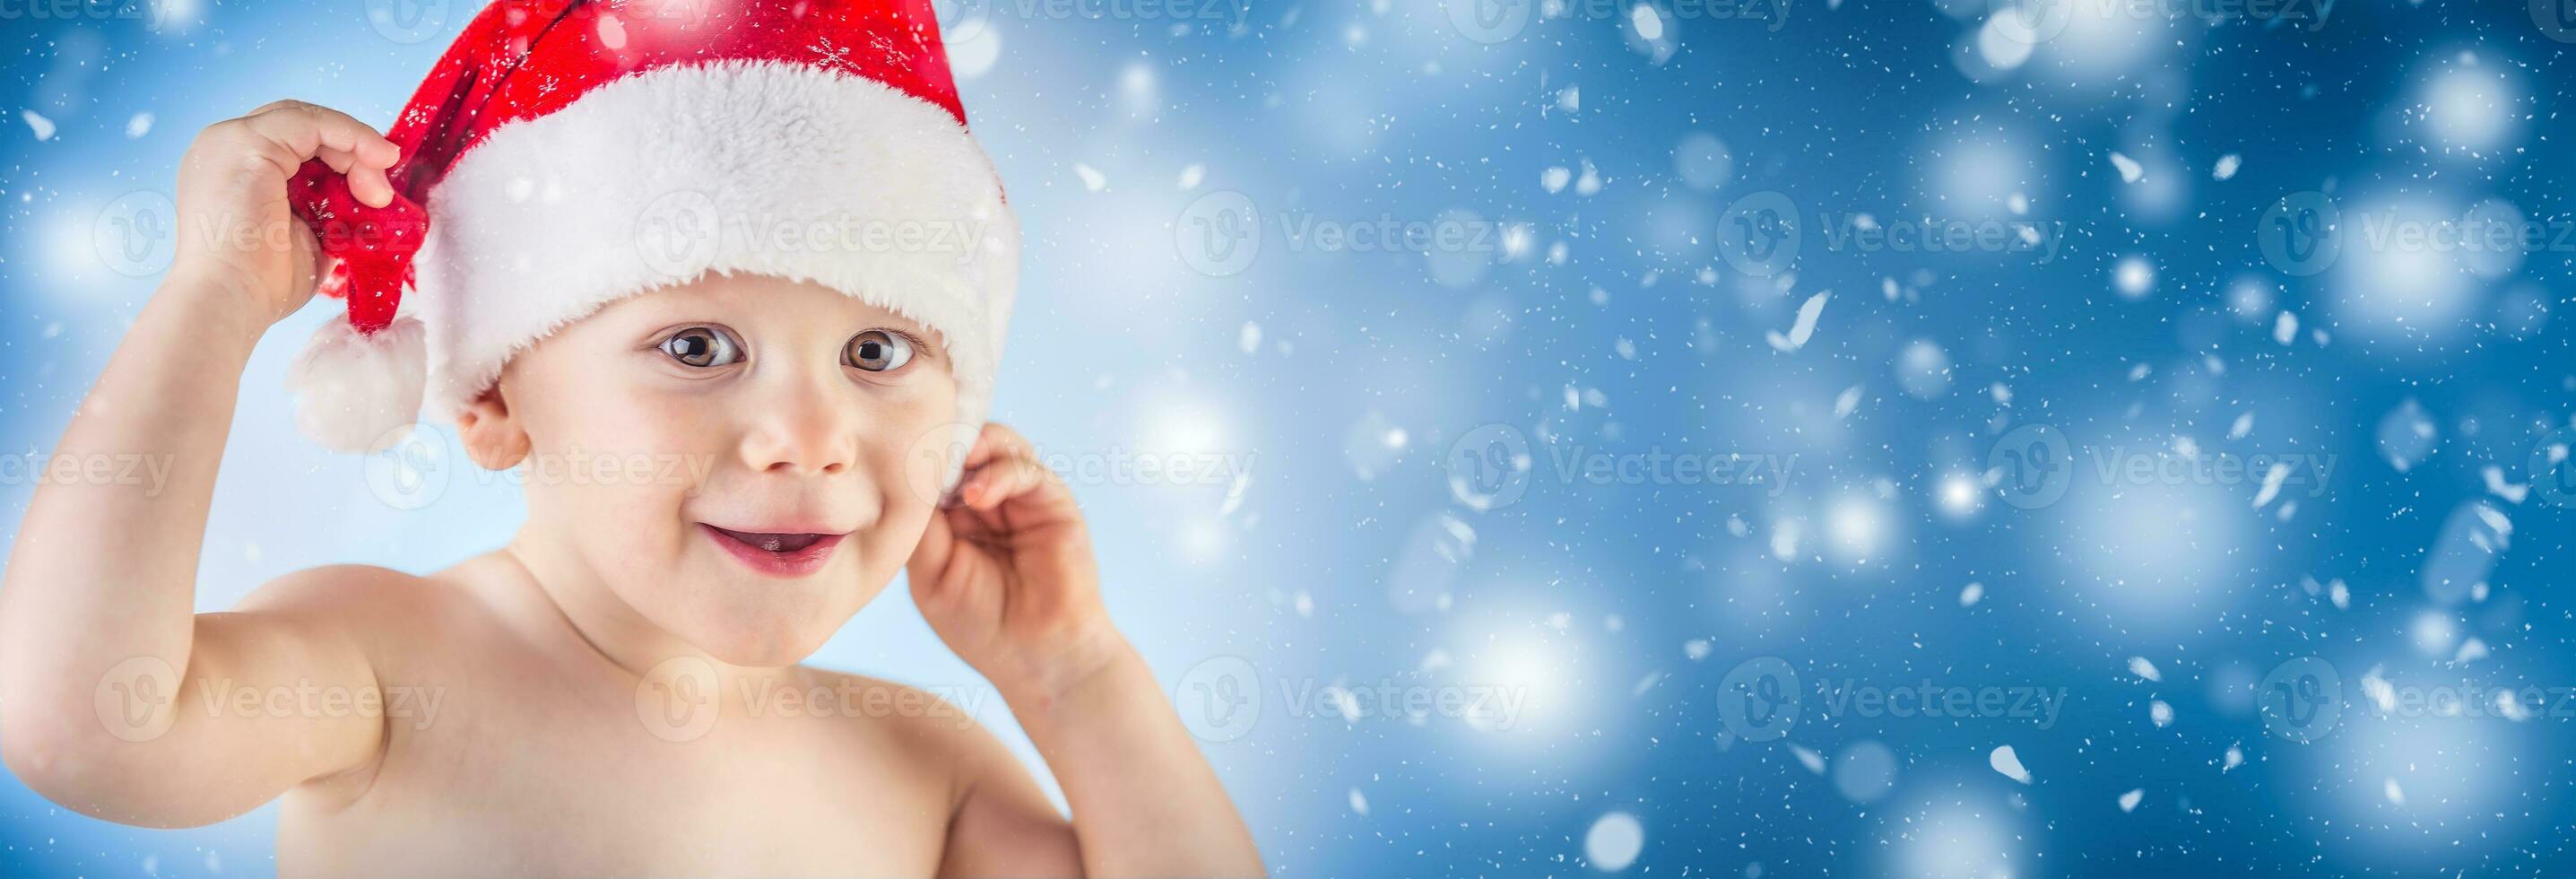 söt bebis pojke med jul keps i abstrakt snöig panorama- baner foto